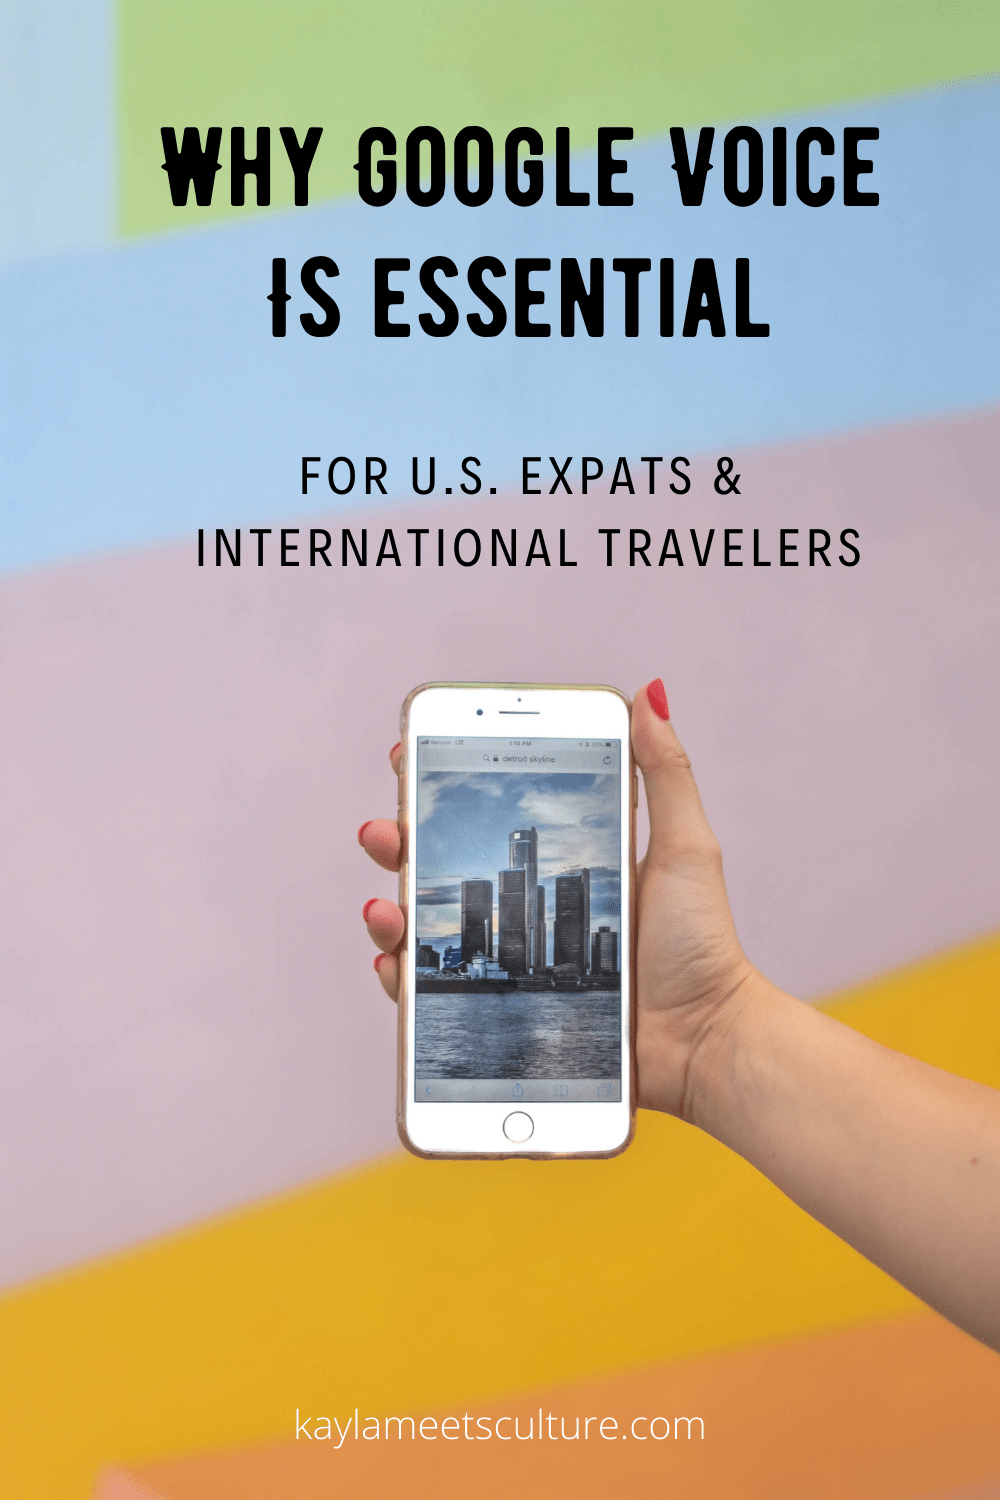 google-voice-travel-international-expats-pinterest